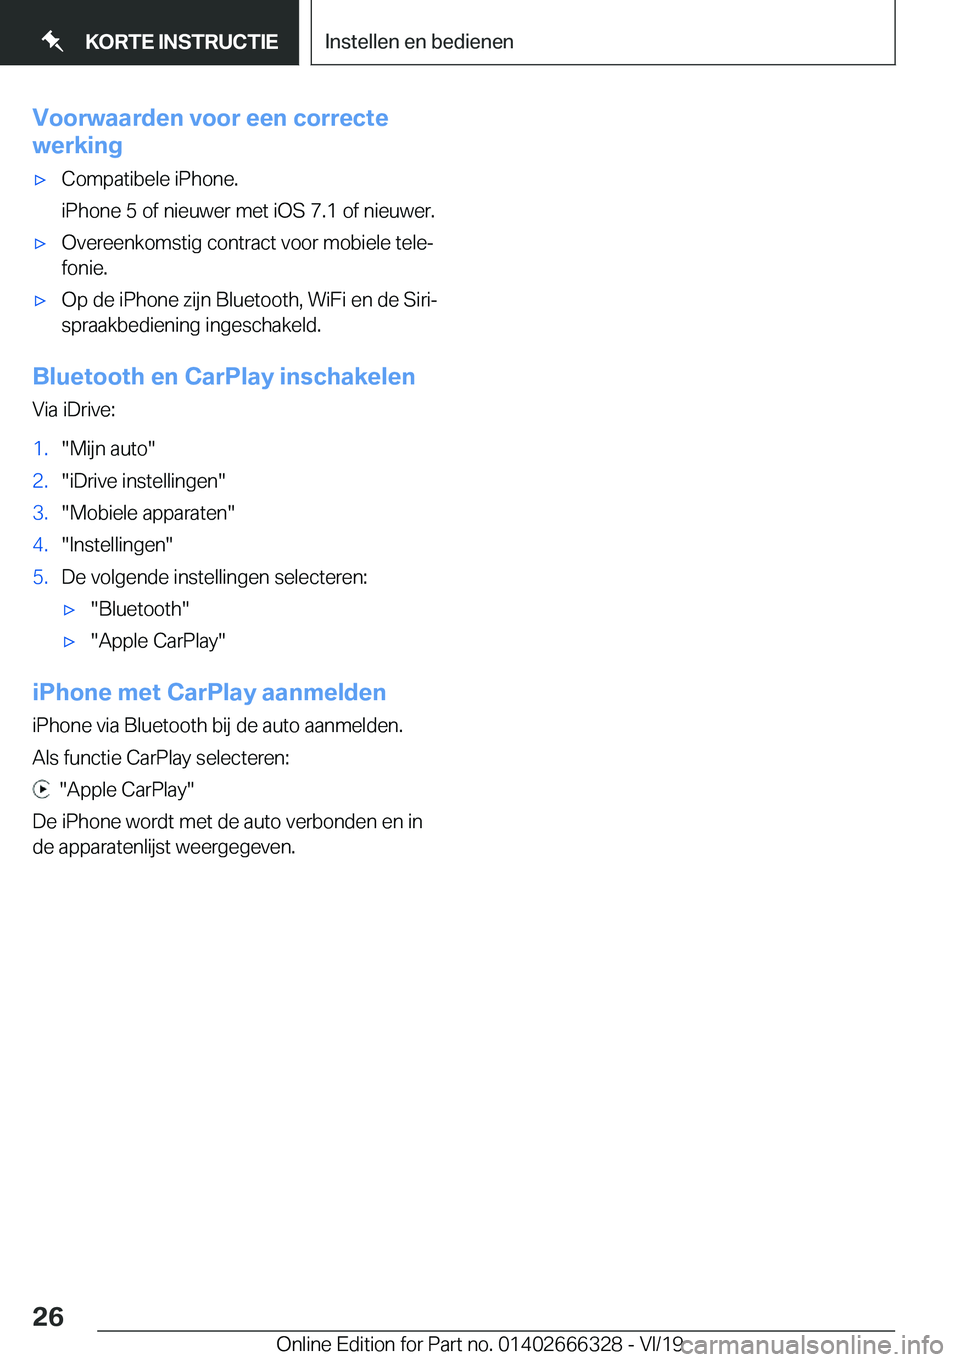 BMW 4 SERIES COUPE 2020  Instructieboekjes (in Dutch) �V�o�o�r�w�a�a�r�d�e�n��v�o�o�r��e�e�n��c�o�r�r�e�c�t�e
�w�e�r�k�i�n�g'x�C�o�m�p�a�t�i�b�e�l�e��i�P�h�o�n�e�.
�i�P�h�o�n�e��5��o�f��n�i�e�u�w�e�r��m�e�t��i�O�S��7�.�1��o�f��n�i�e�u�w�e